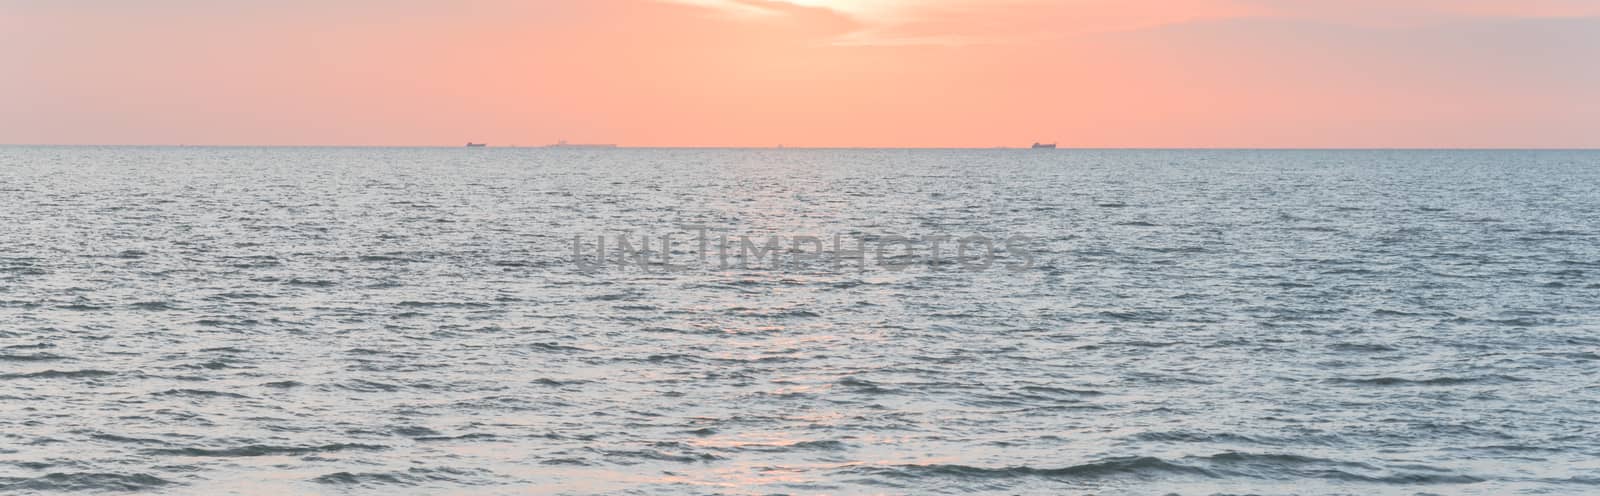 Panoramic view peaceful scene of sunset on the beach of Melaka, Malaysia by trongnguyen